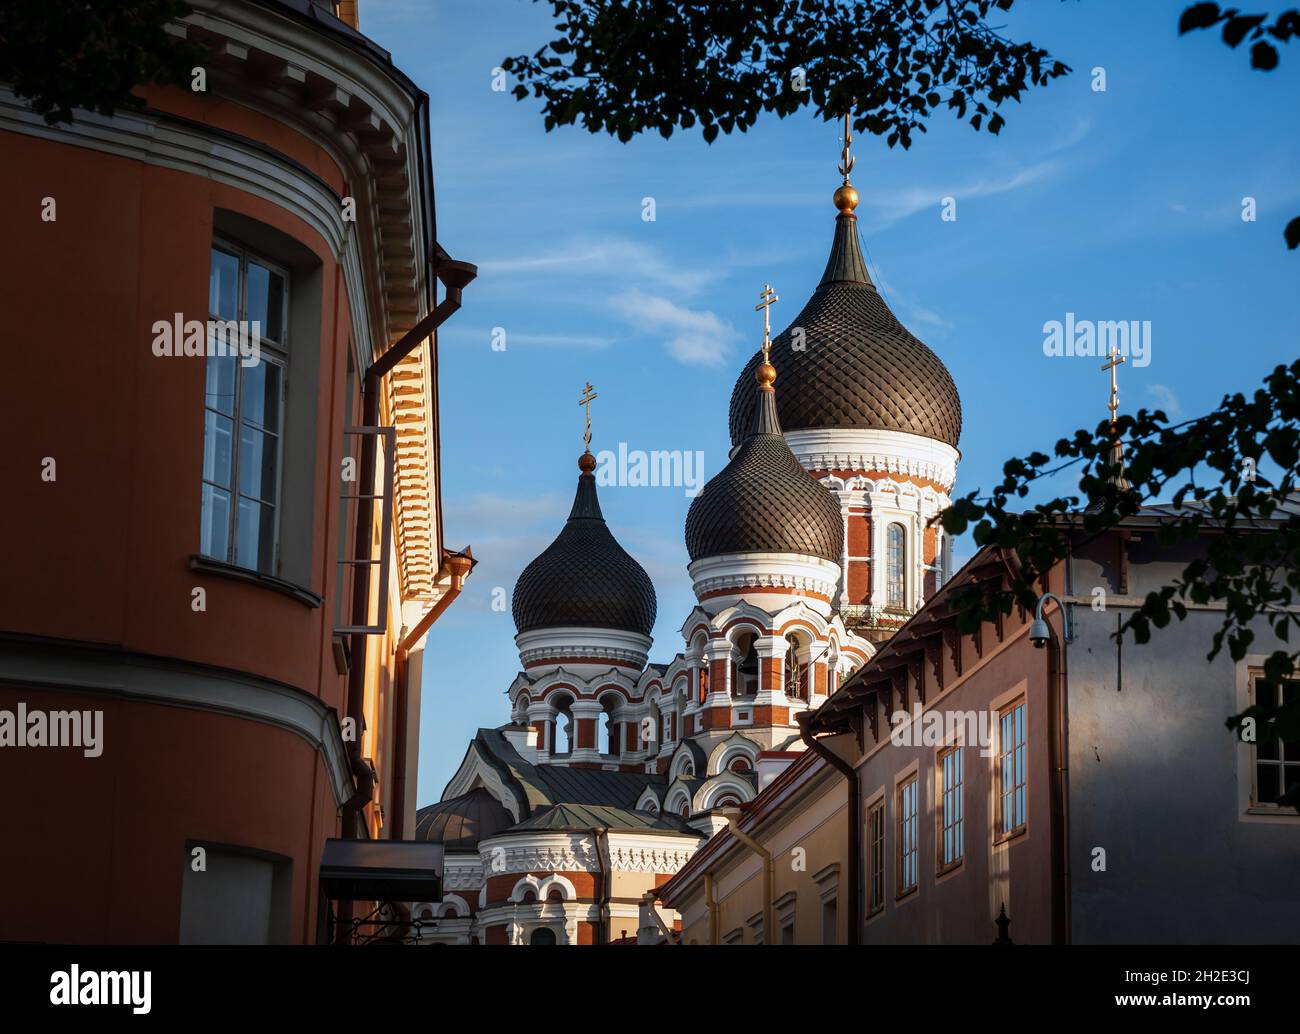 Alexander Nevsky Cathedral - Tallinn, Estonia Stock Photo